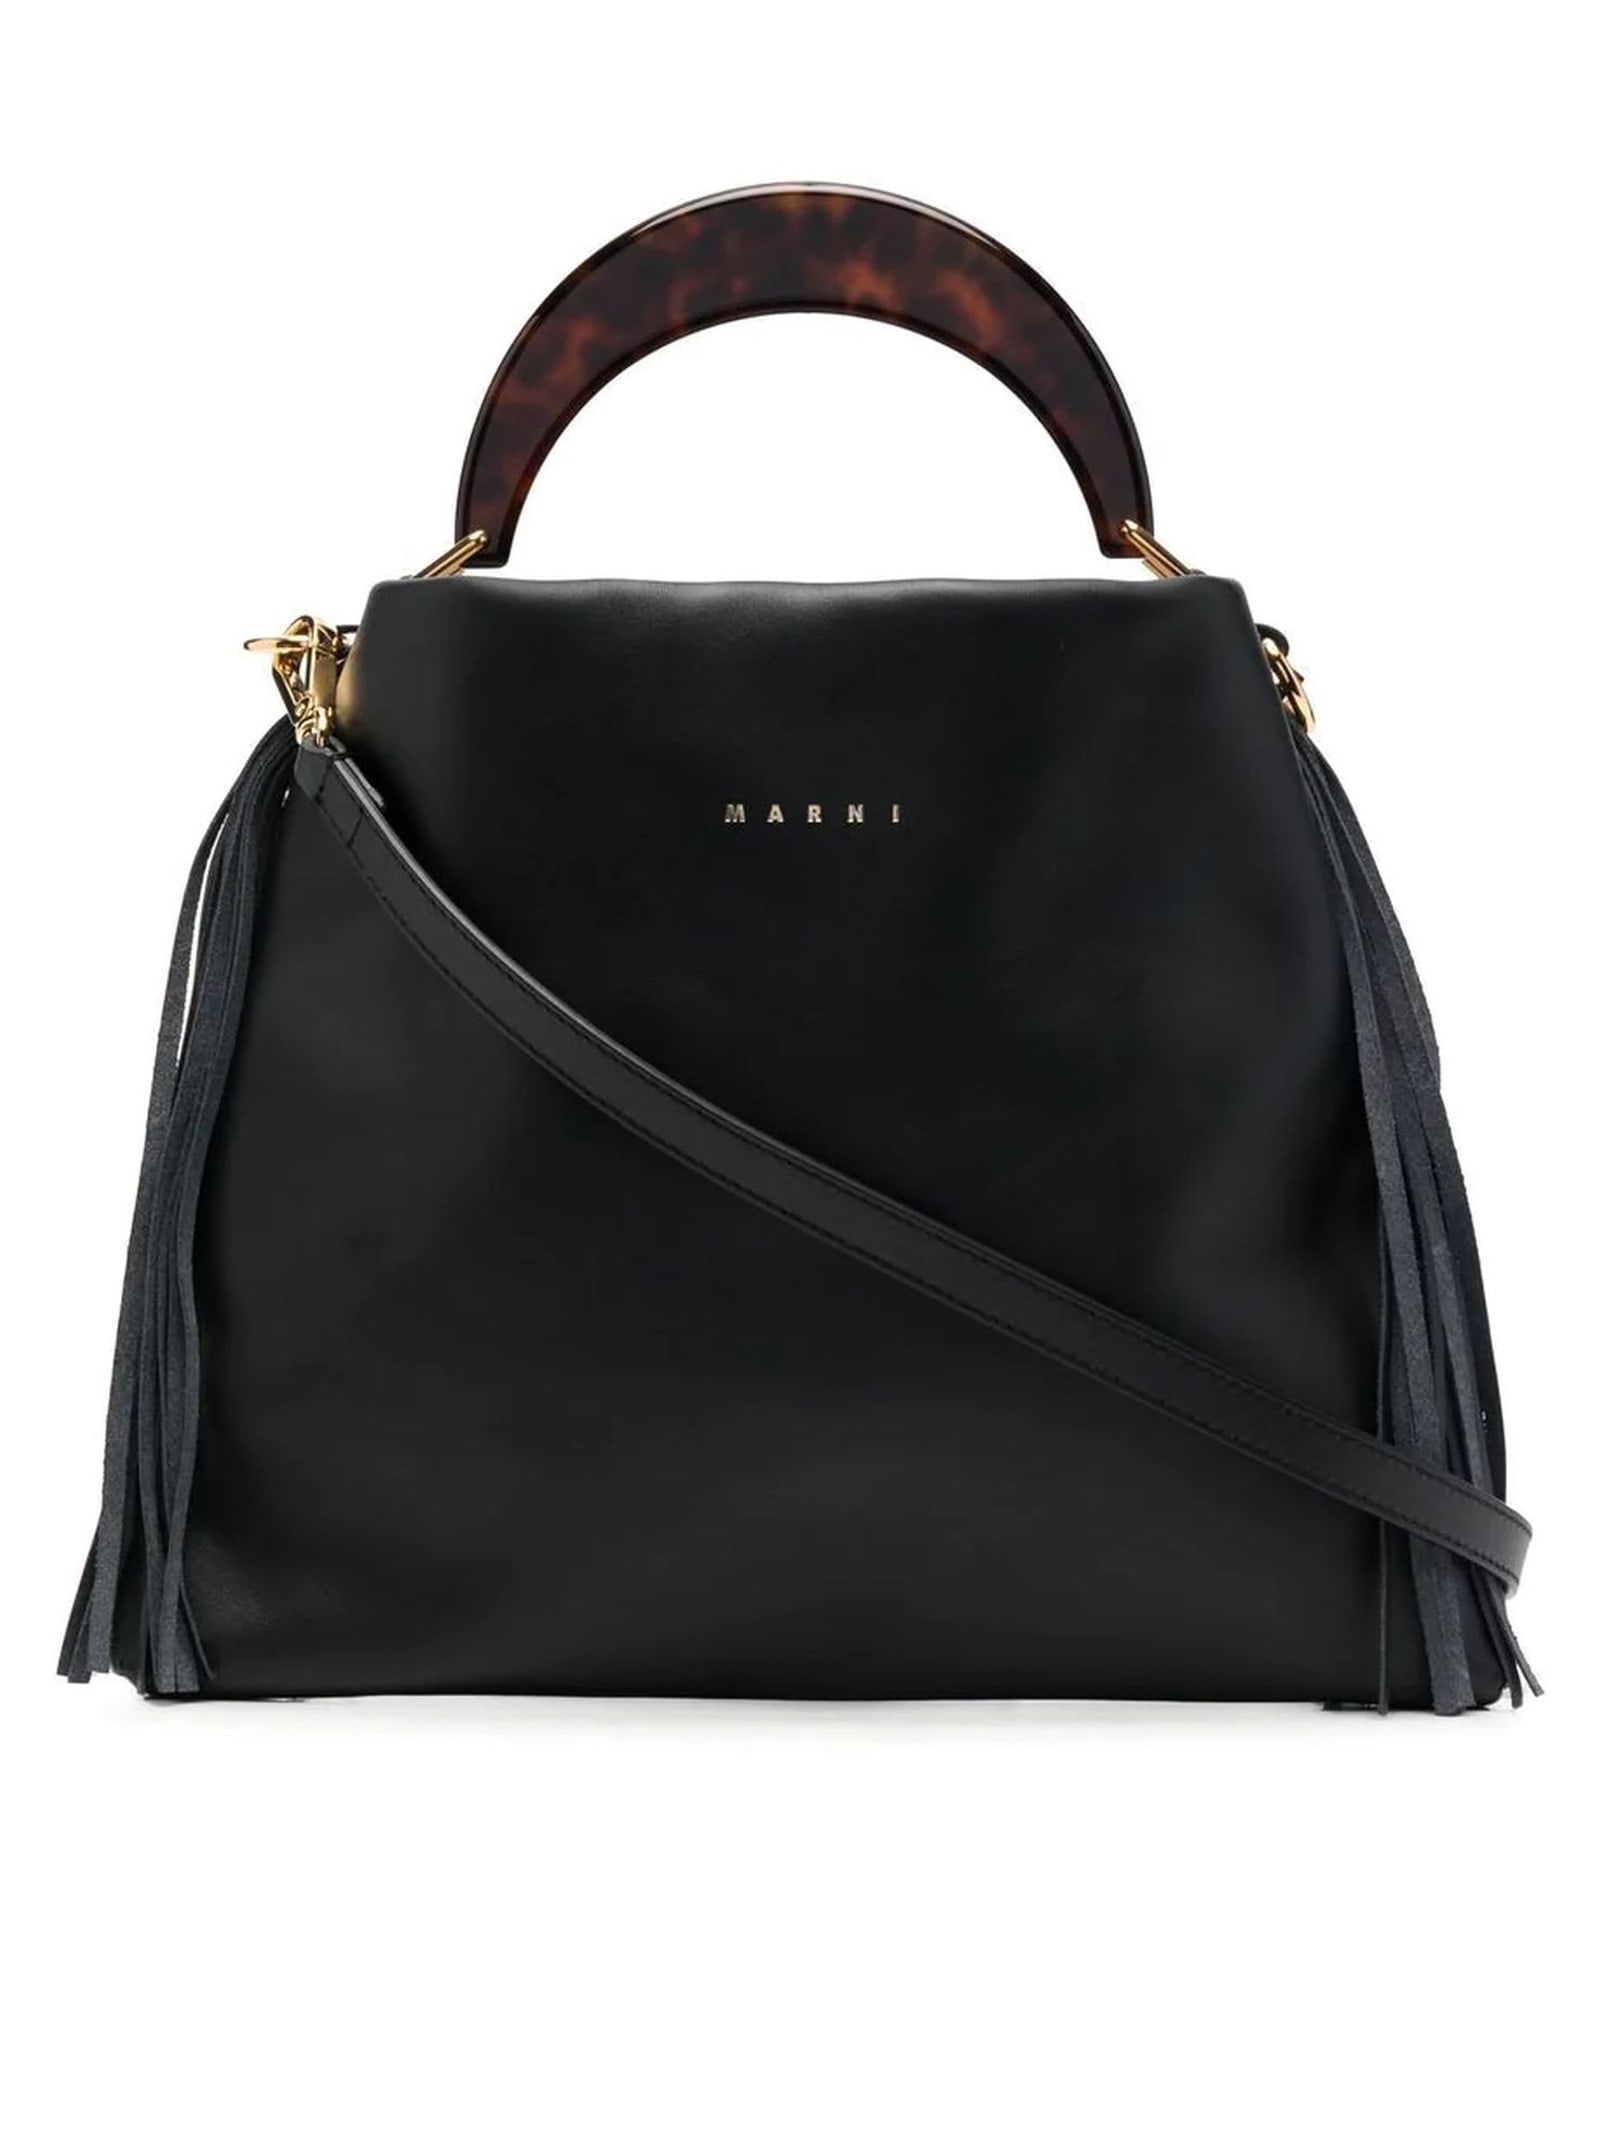 Marni Venice Bag In Black Leather